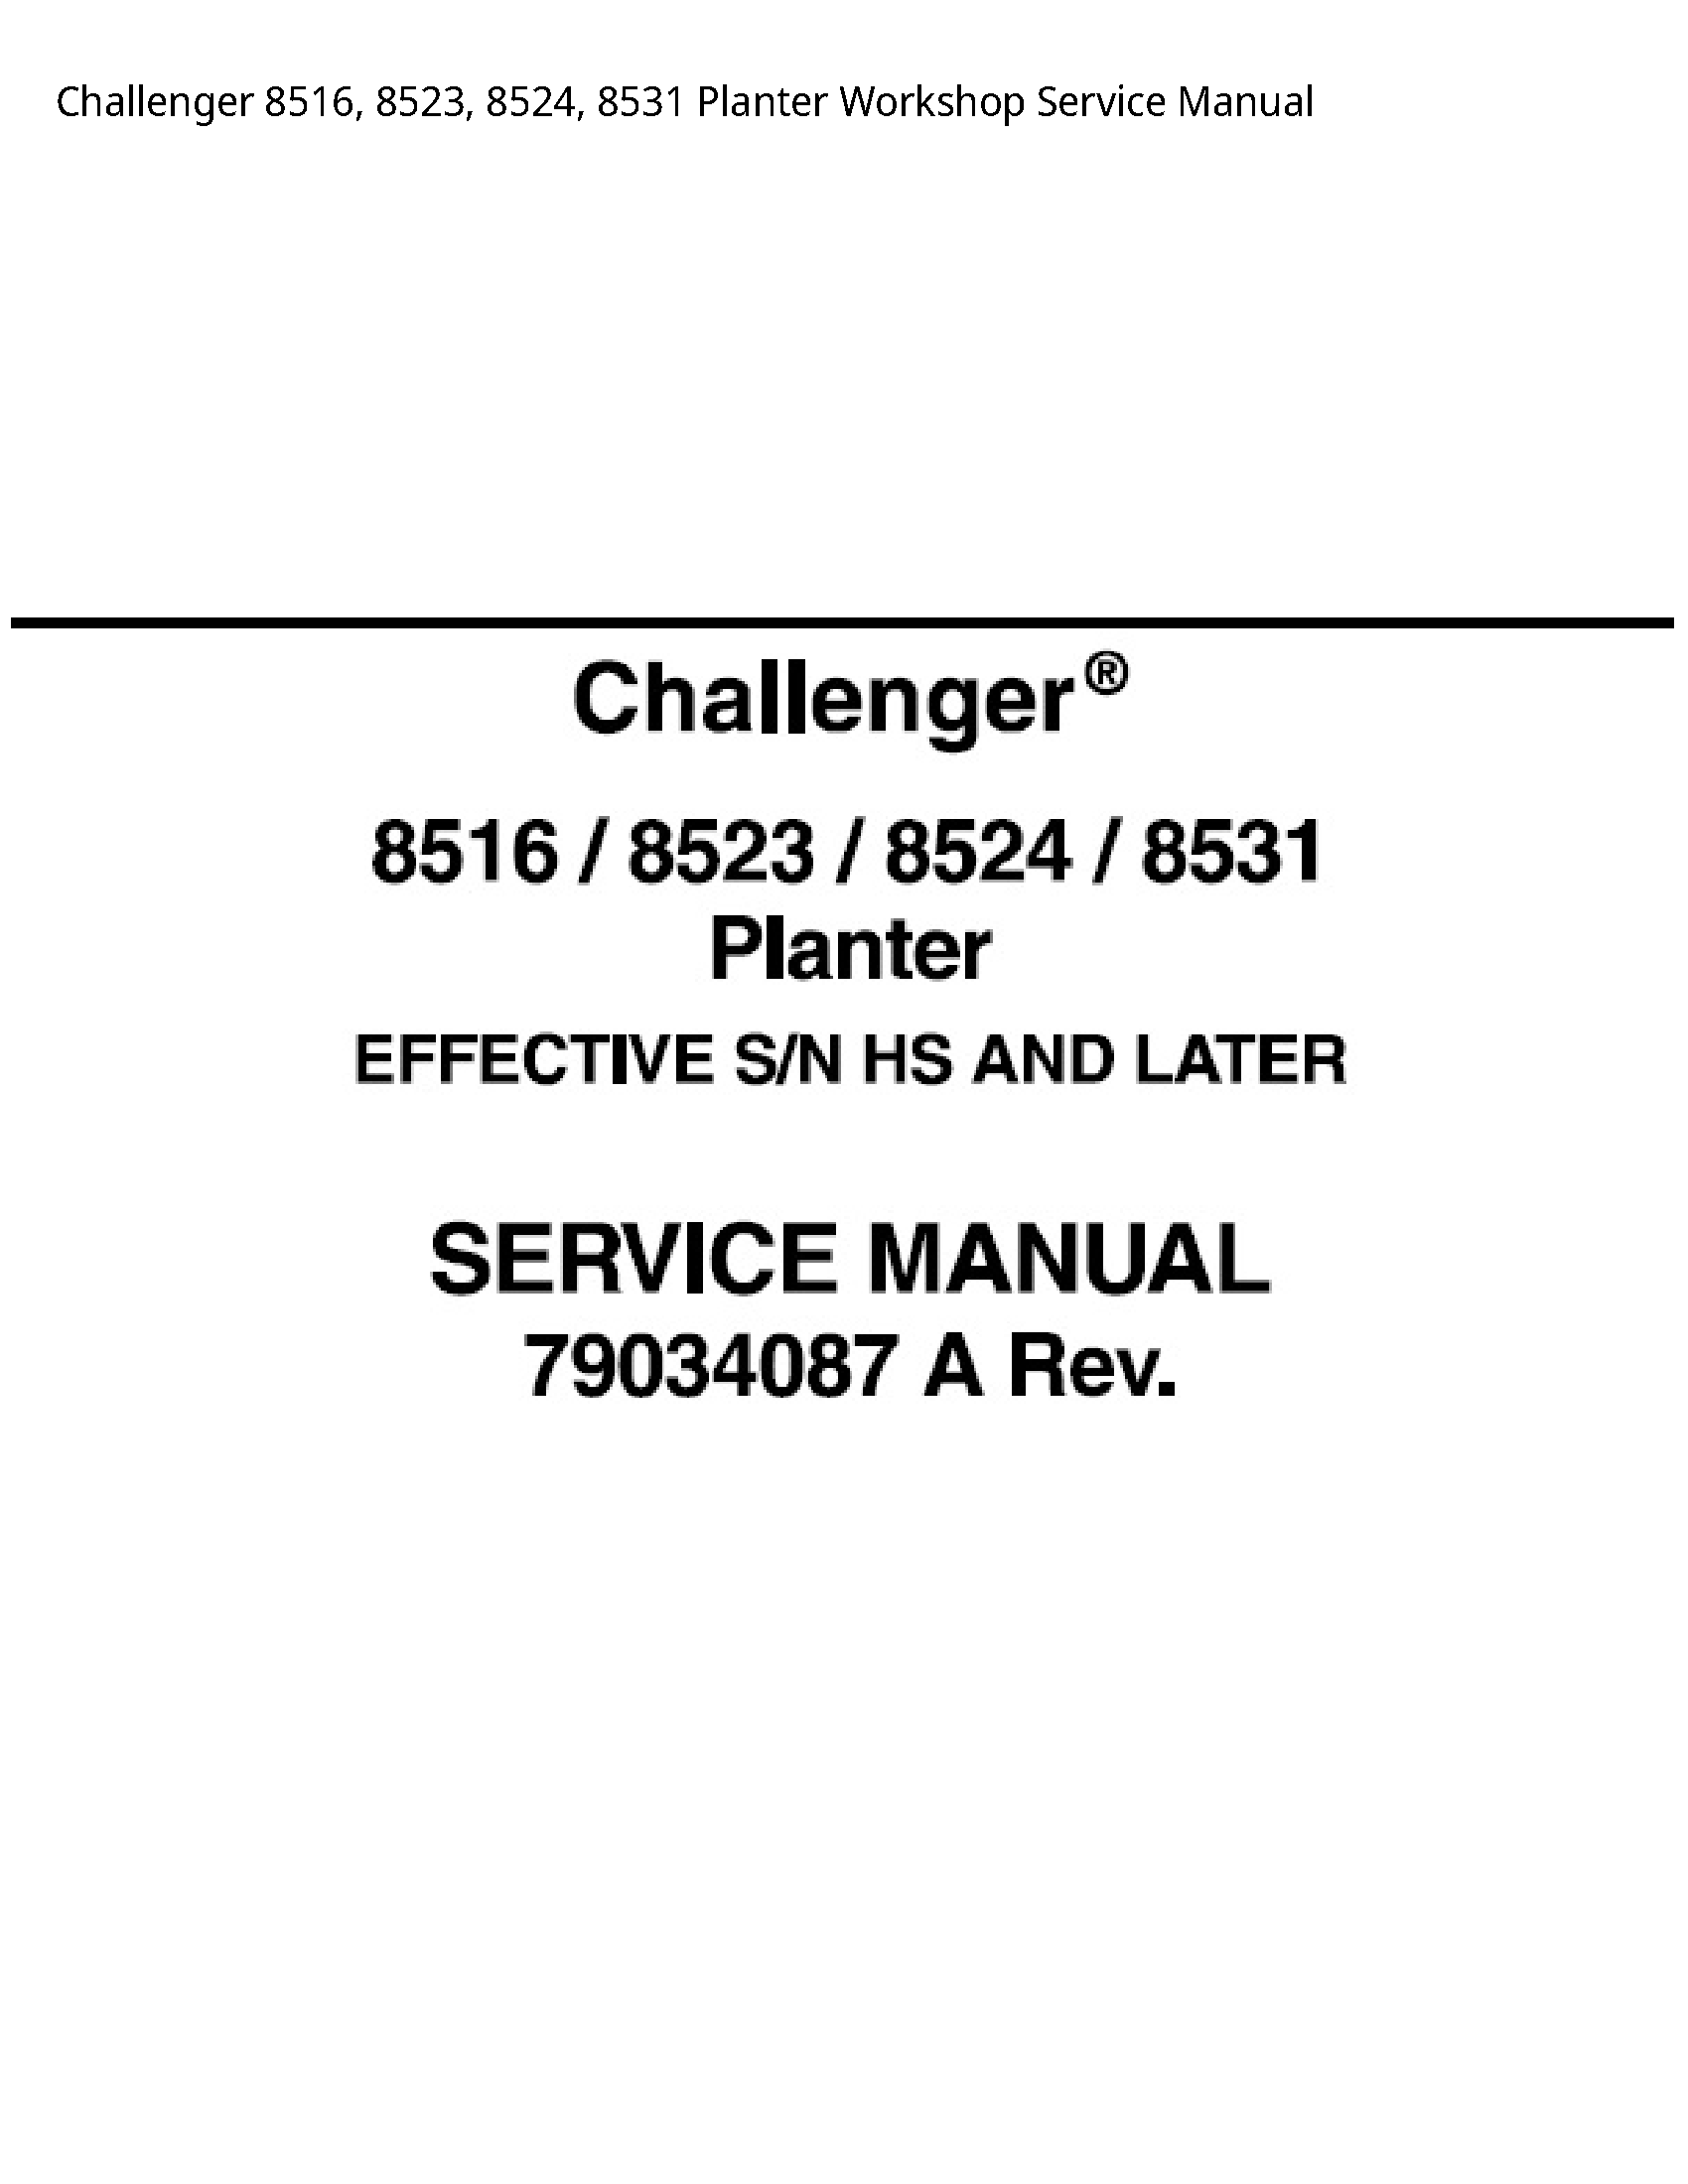 Challenger 8516 Planter Service manual